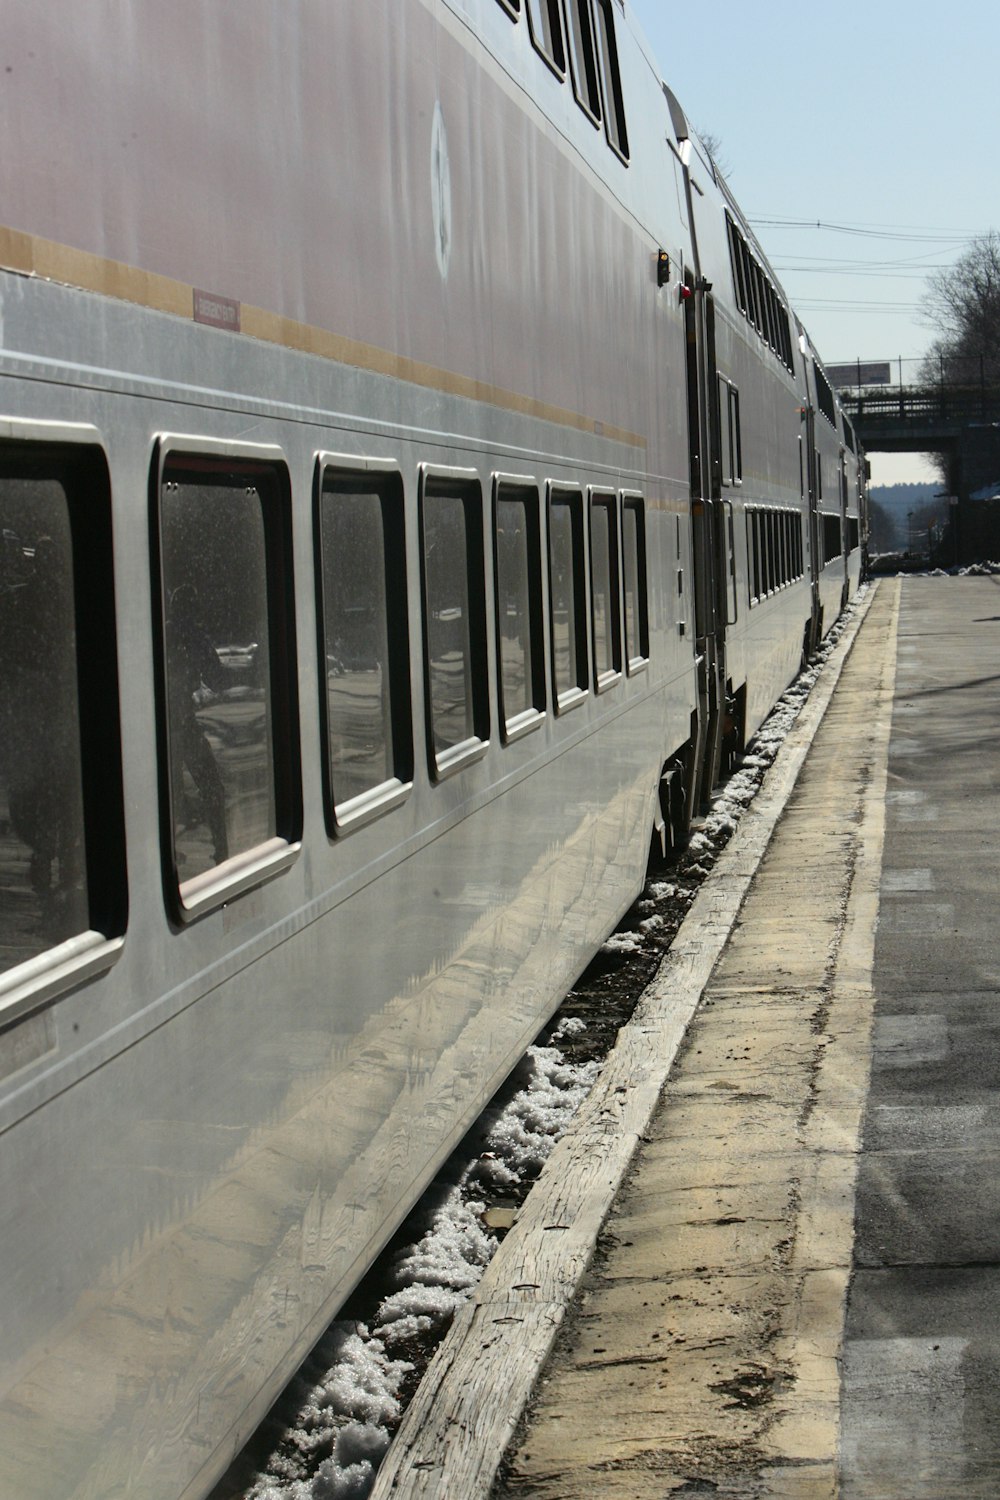 a silver train traveling down train tracks next to a platform